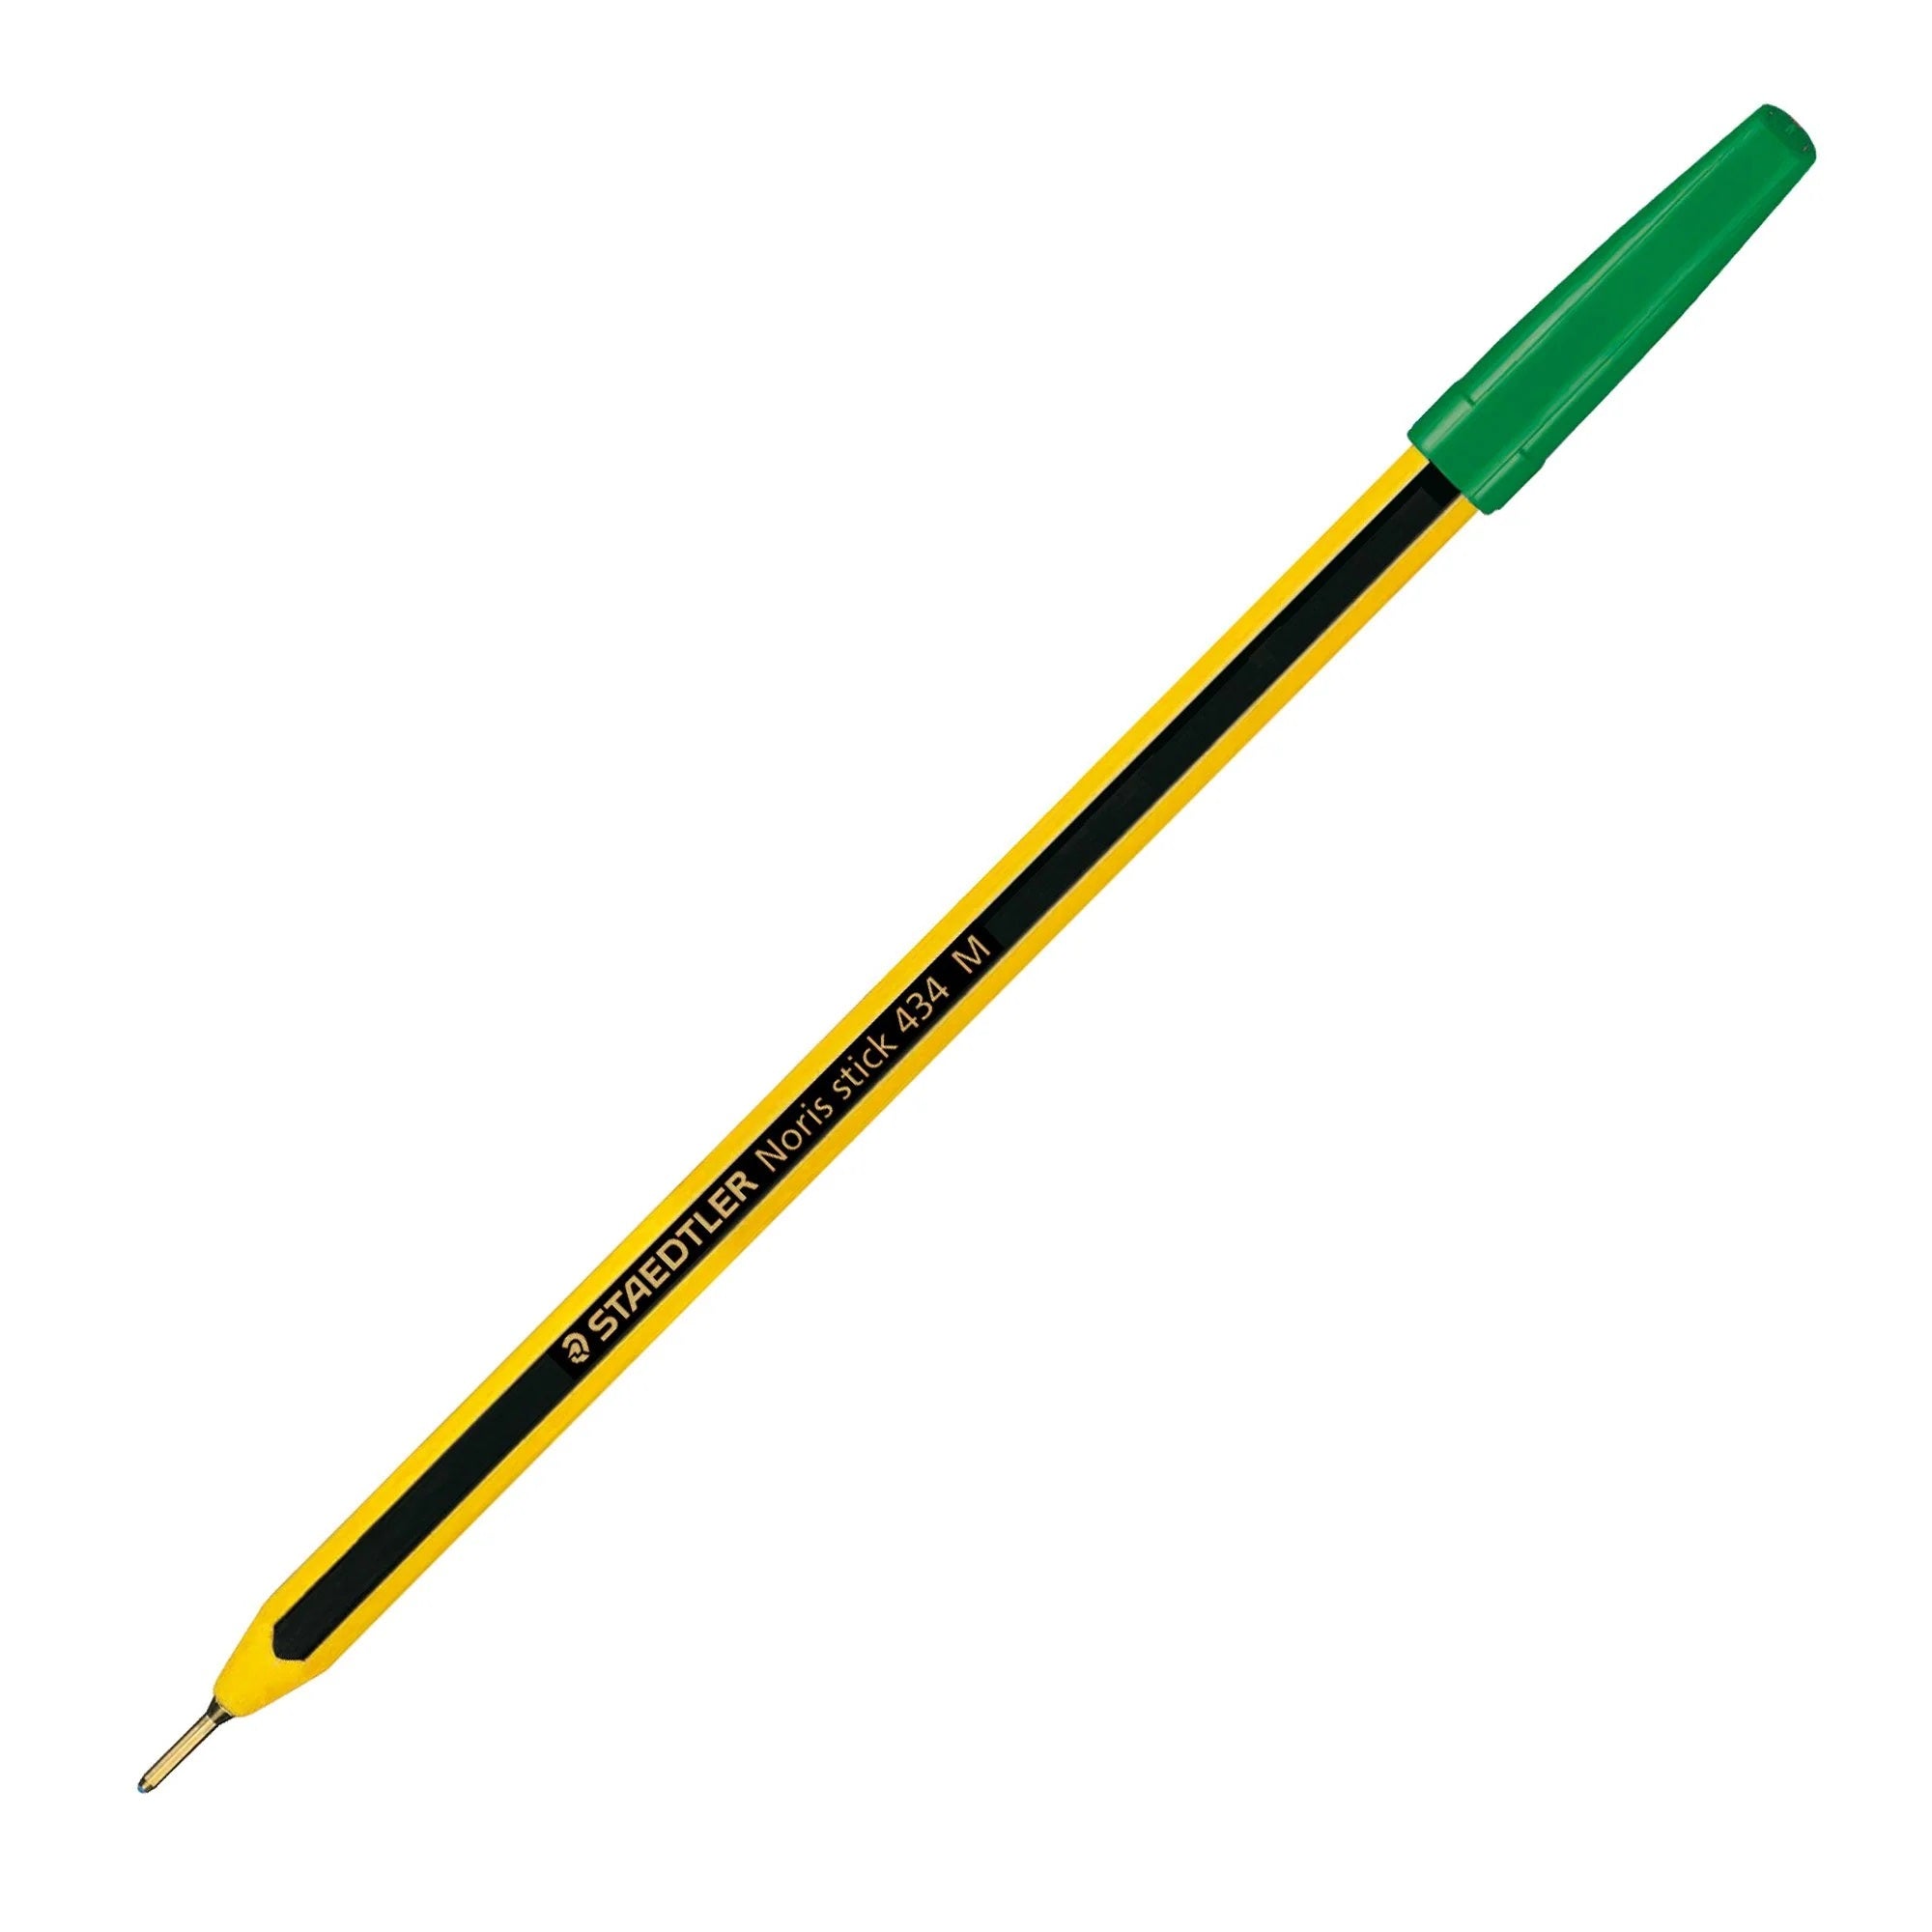 cf. 20 pz. Noris® stick 434 M Penna a sfera colore verde sc.